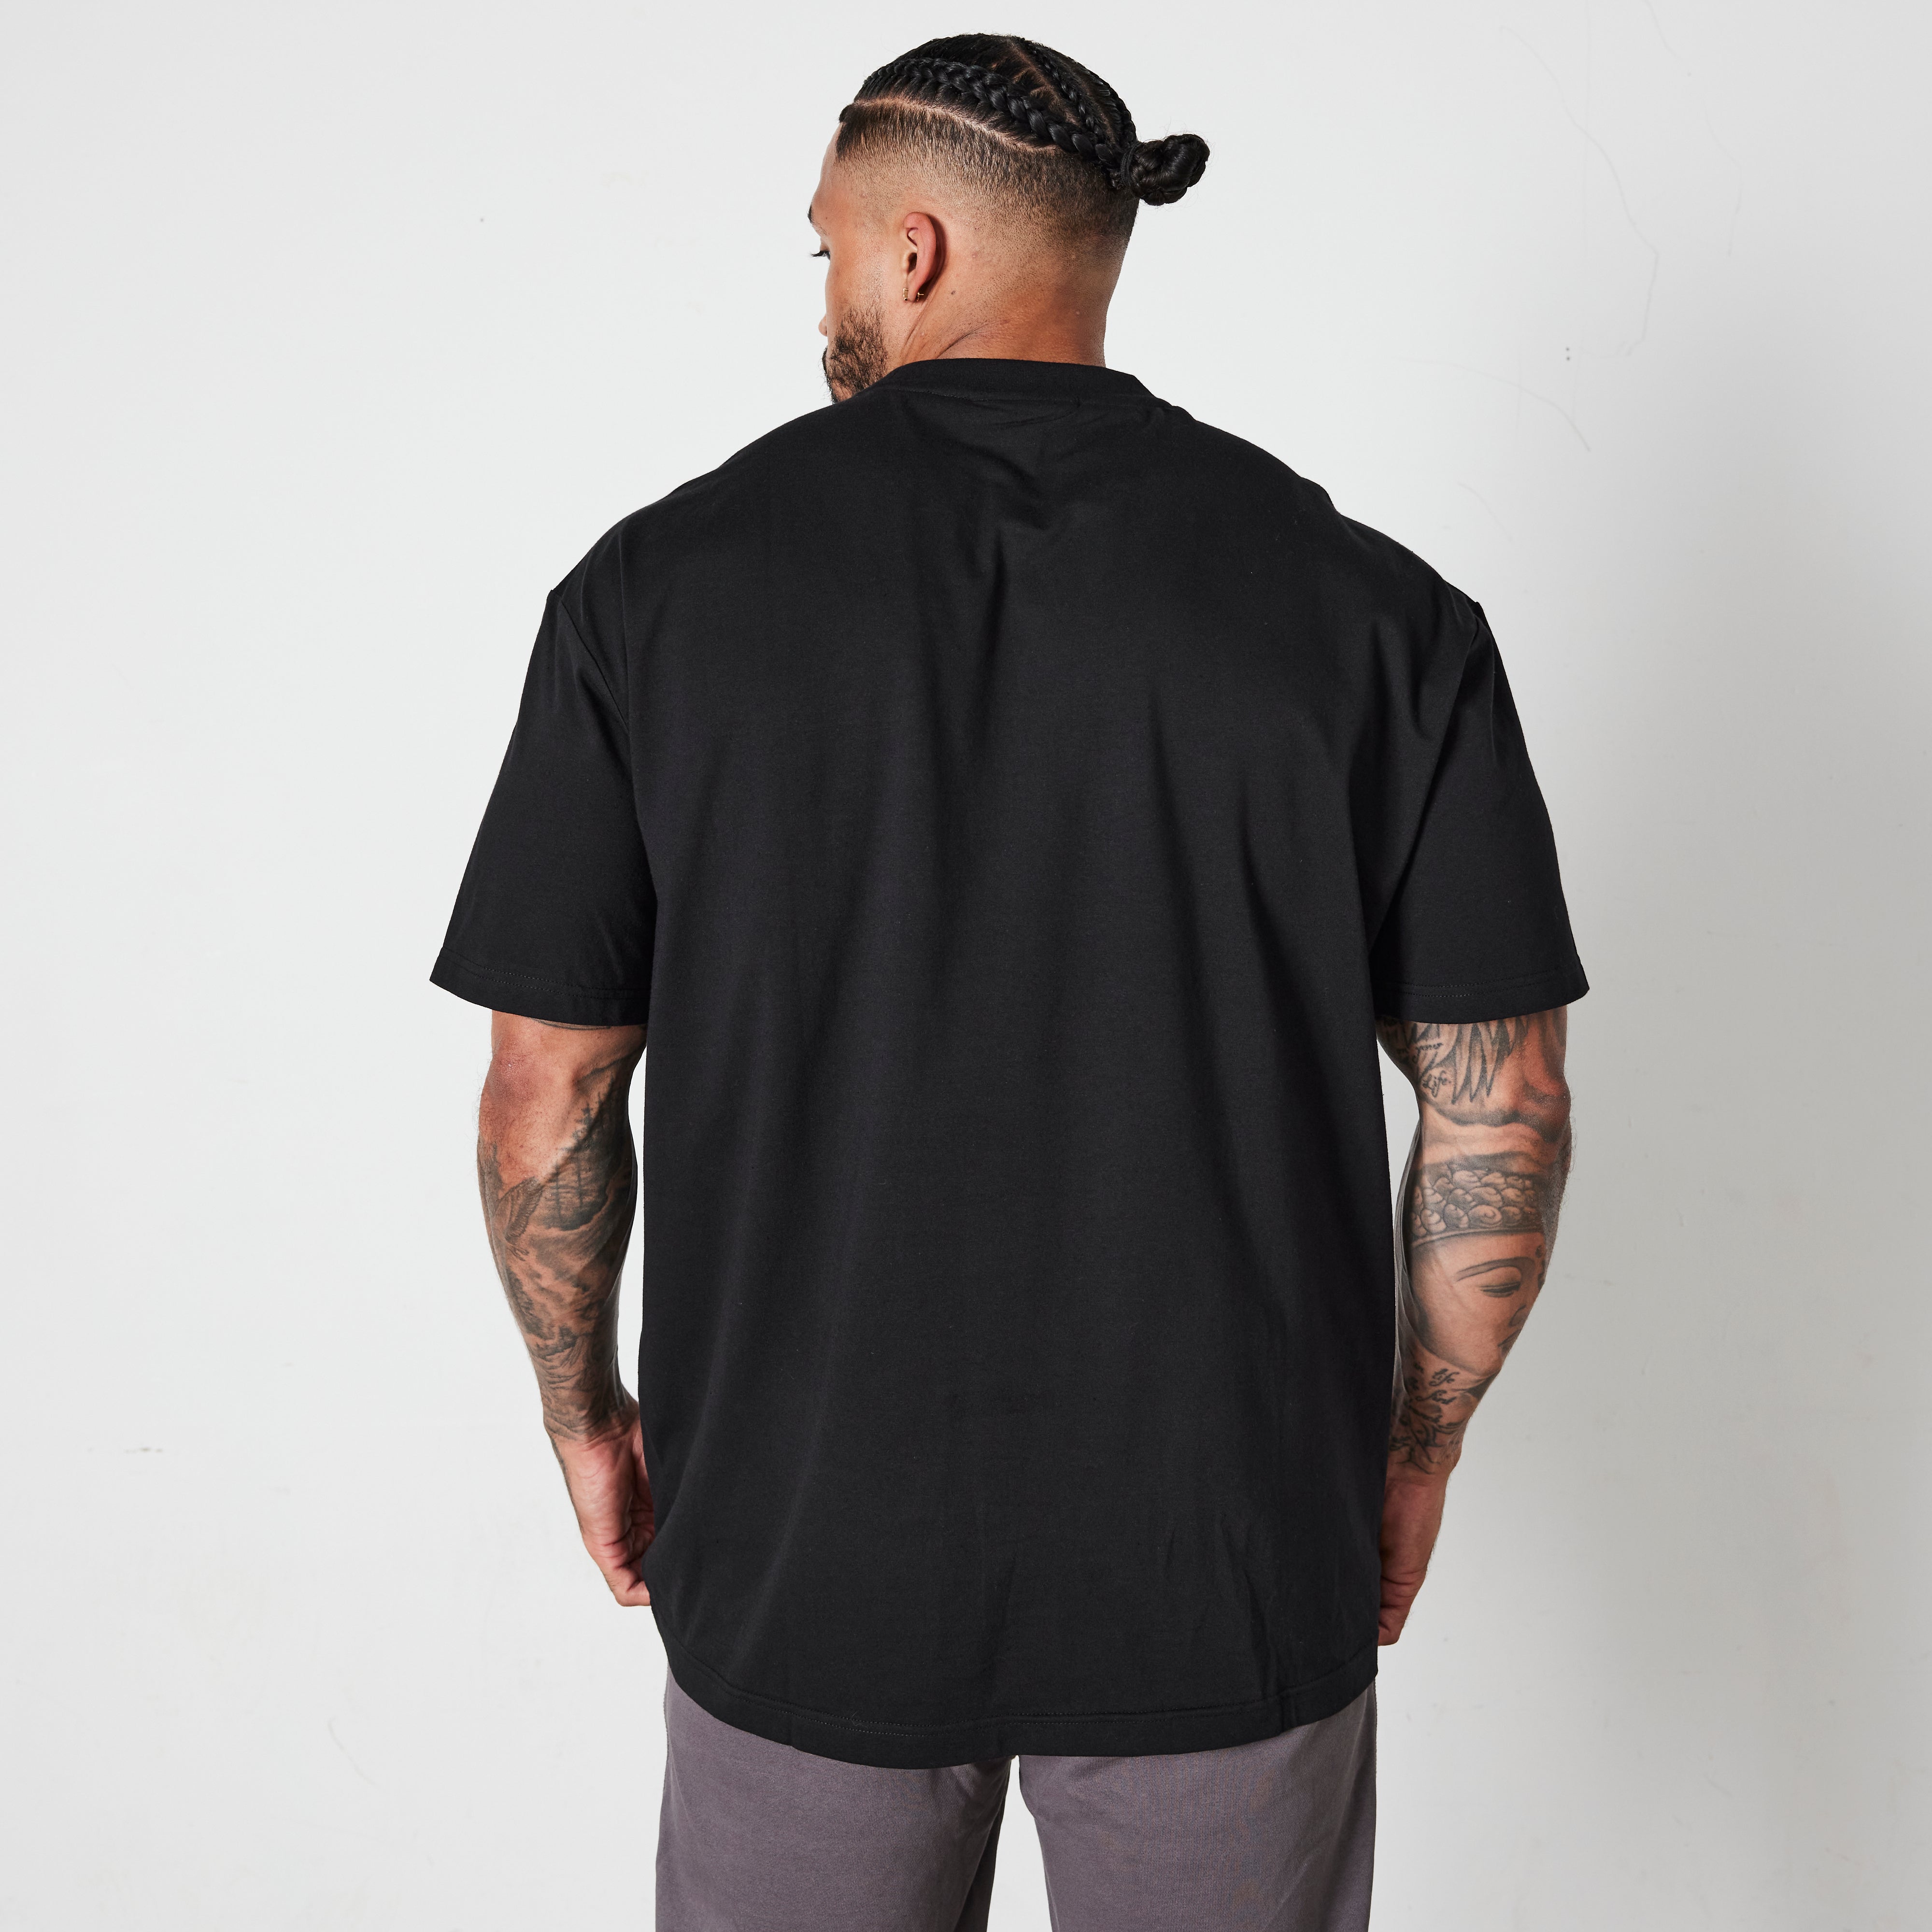 Vanquish Black Signature Collection Oversized T Shirt